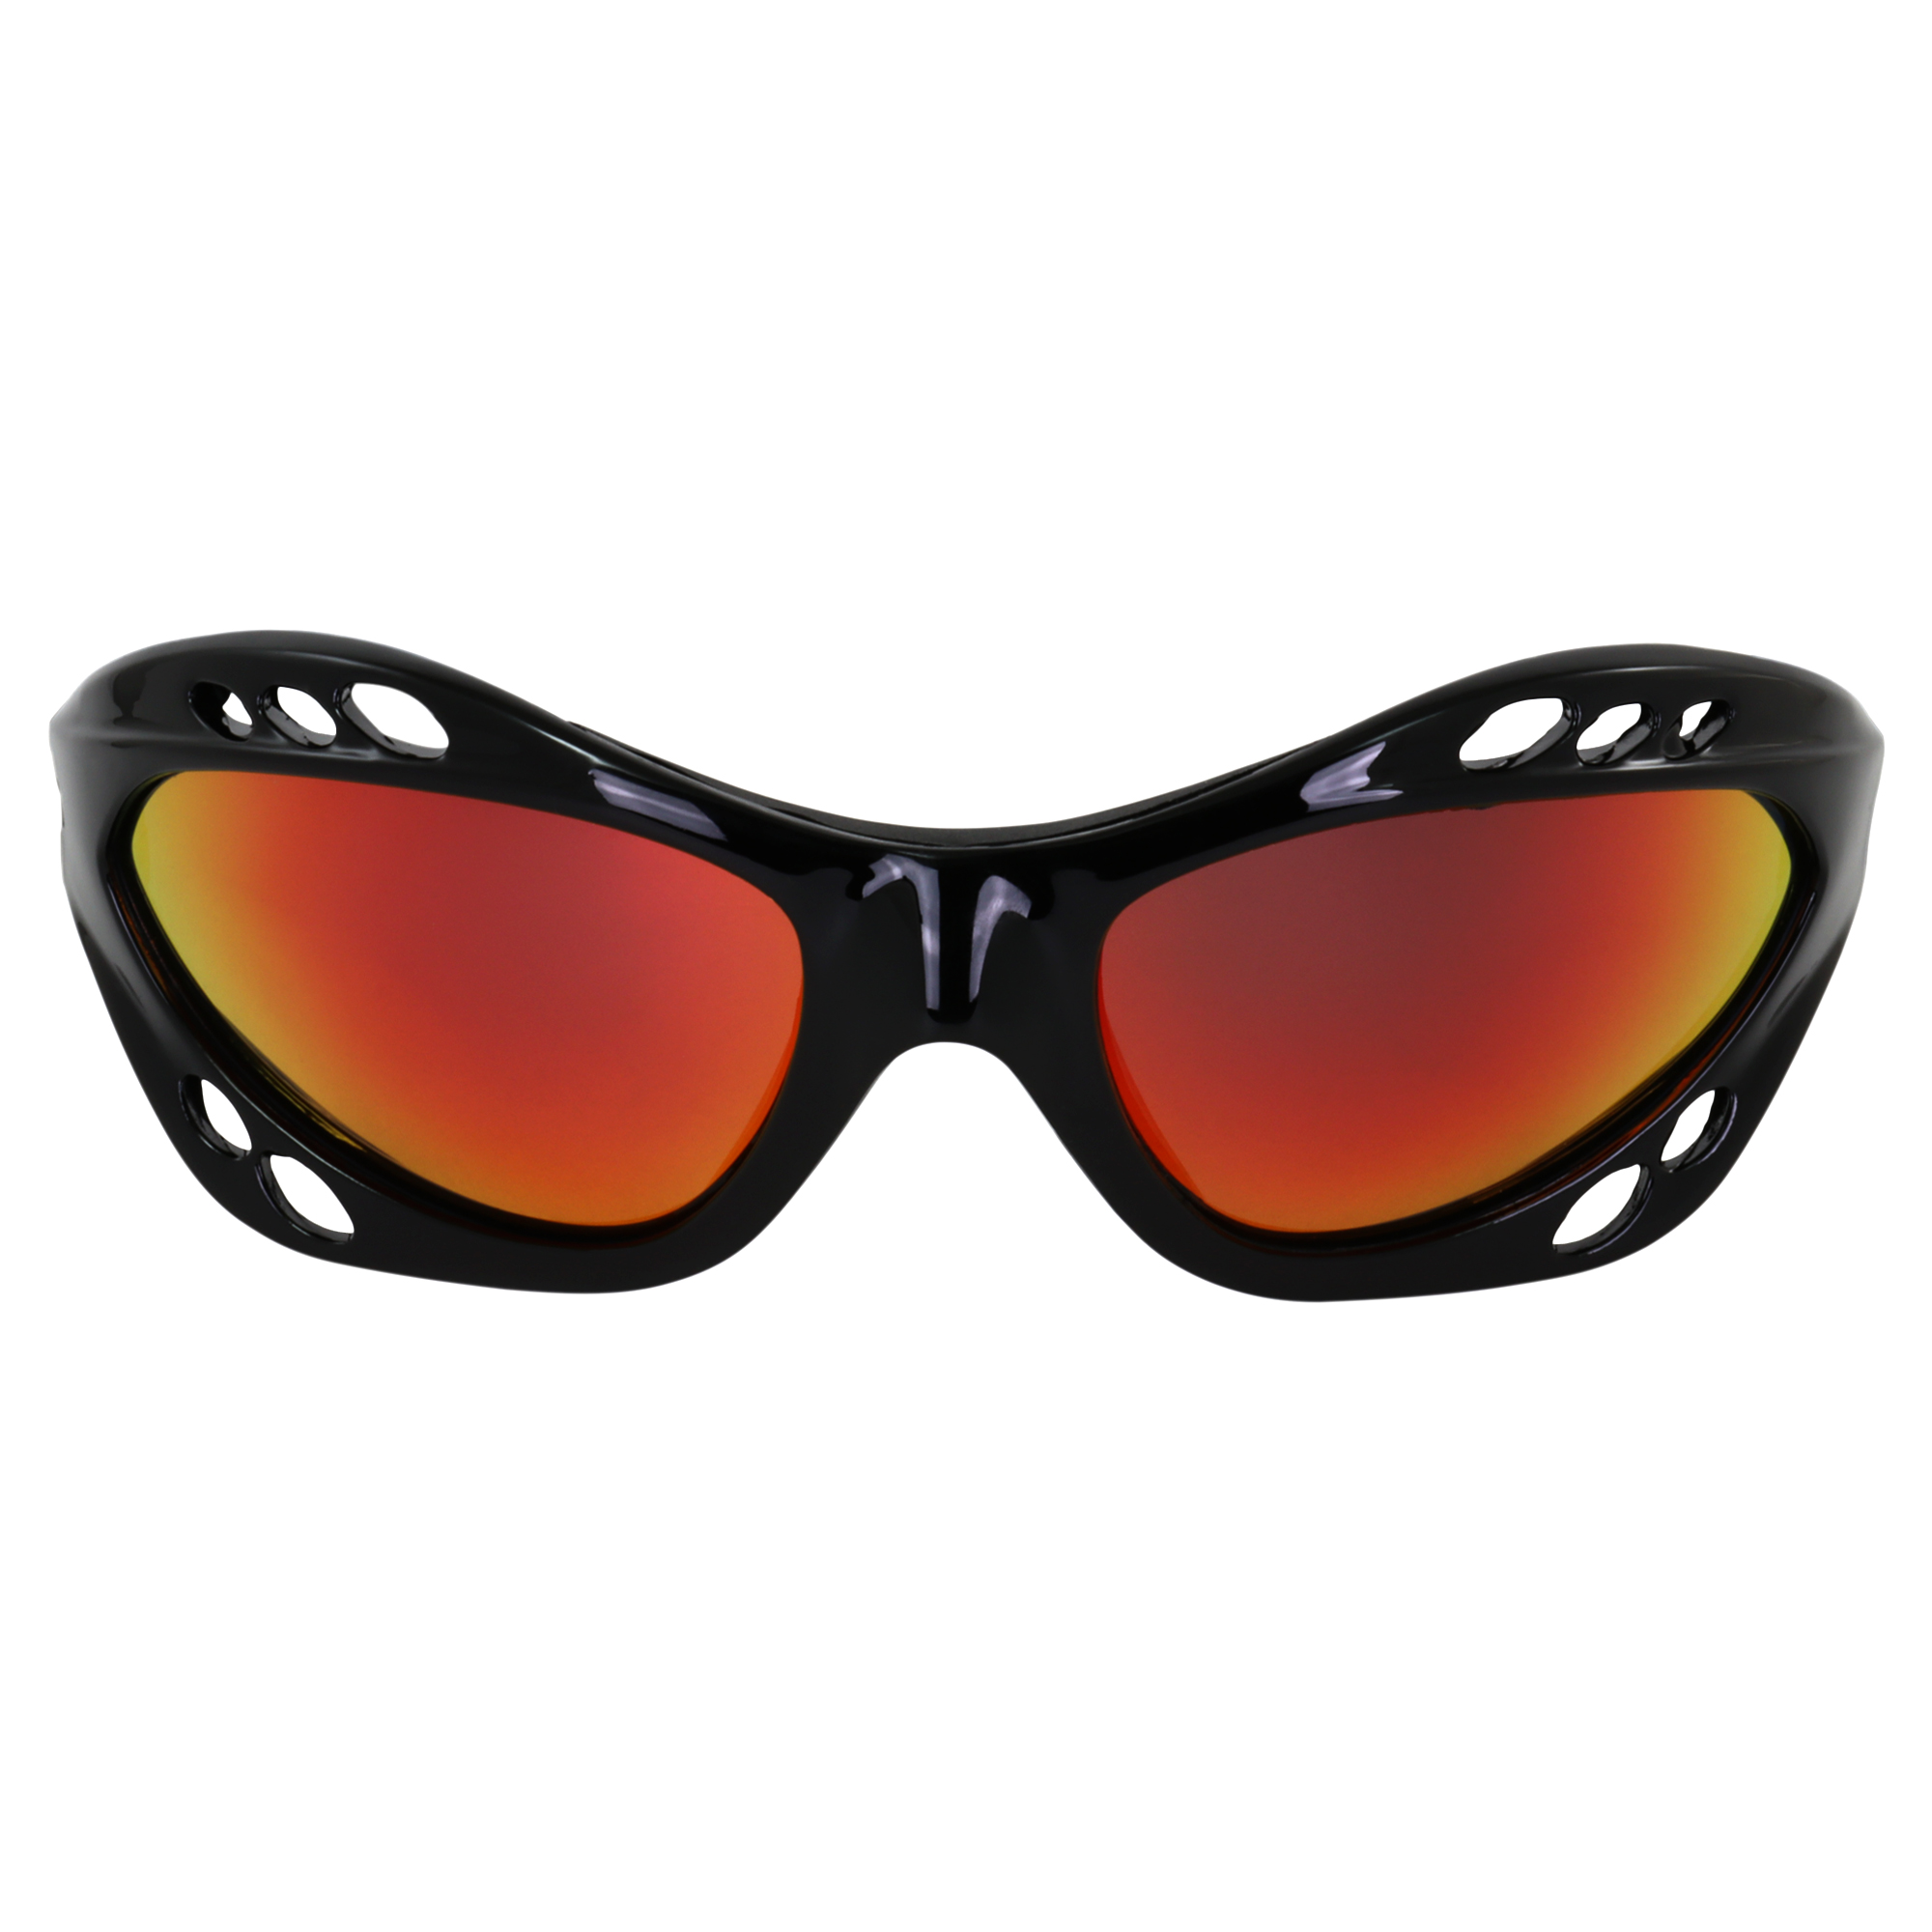 Birdz Seahawk Padded Polarized Sunglasses Jetski Kayaking Jet Ski Watersports w/ Built in Strap Black Frame and Polarized ReflecTech Red Mirror Lens - image 3 of 6